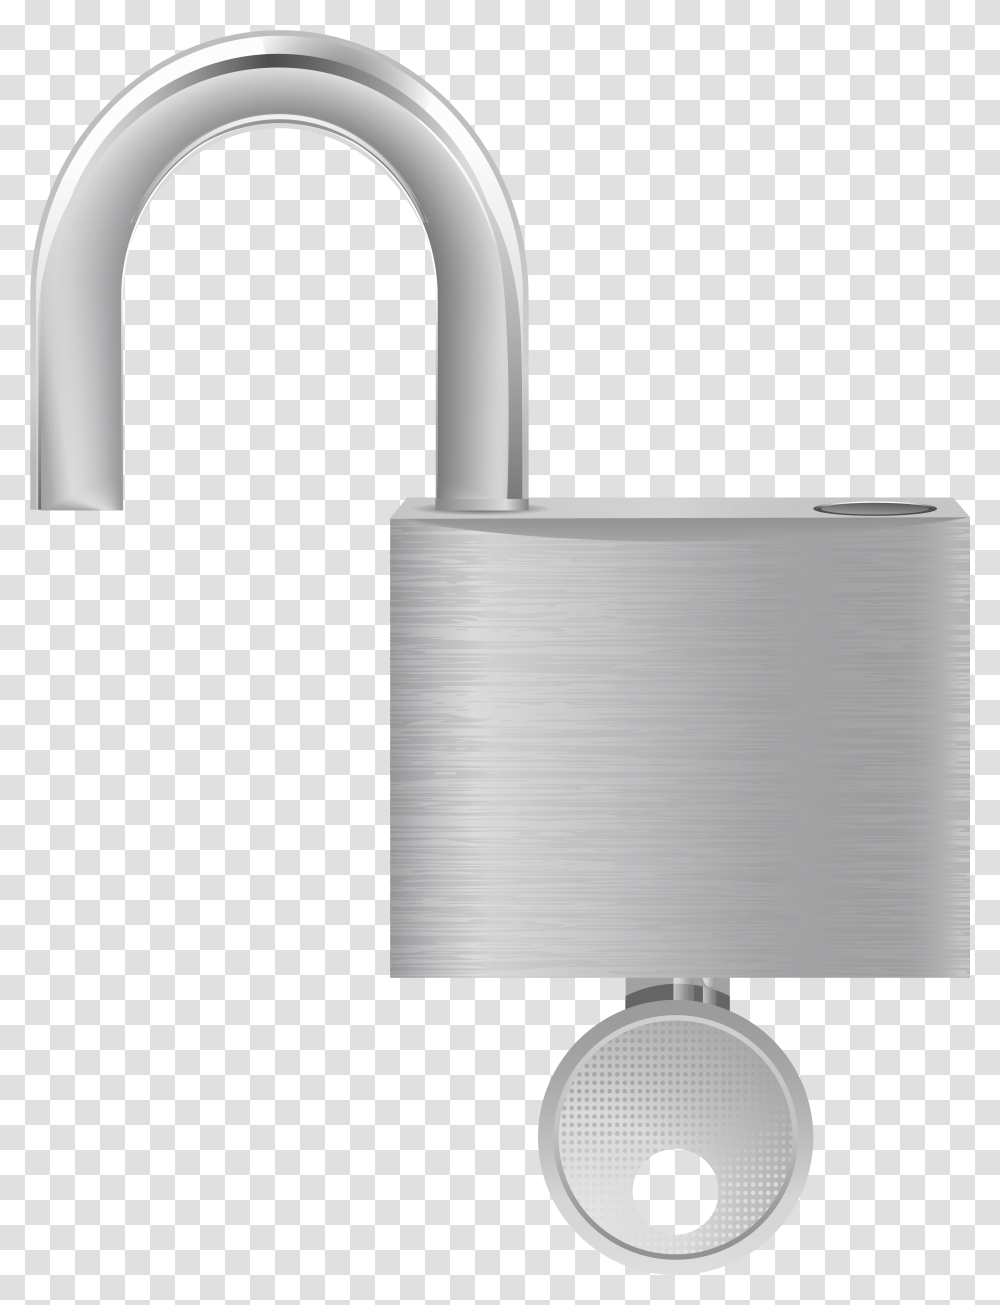 Open Lock Clip Art Opened Lock, Sink Faucet, Lamp, Shower Faucet Transparent Png